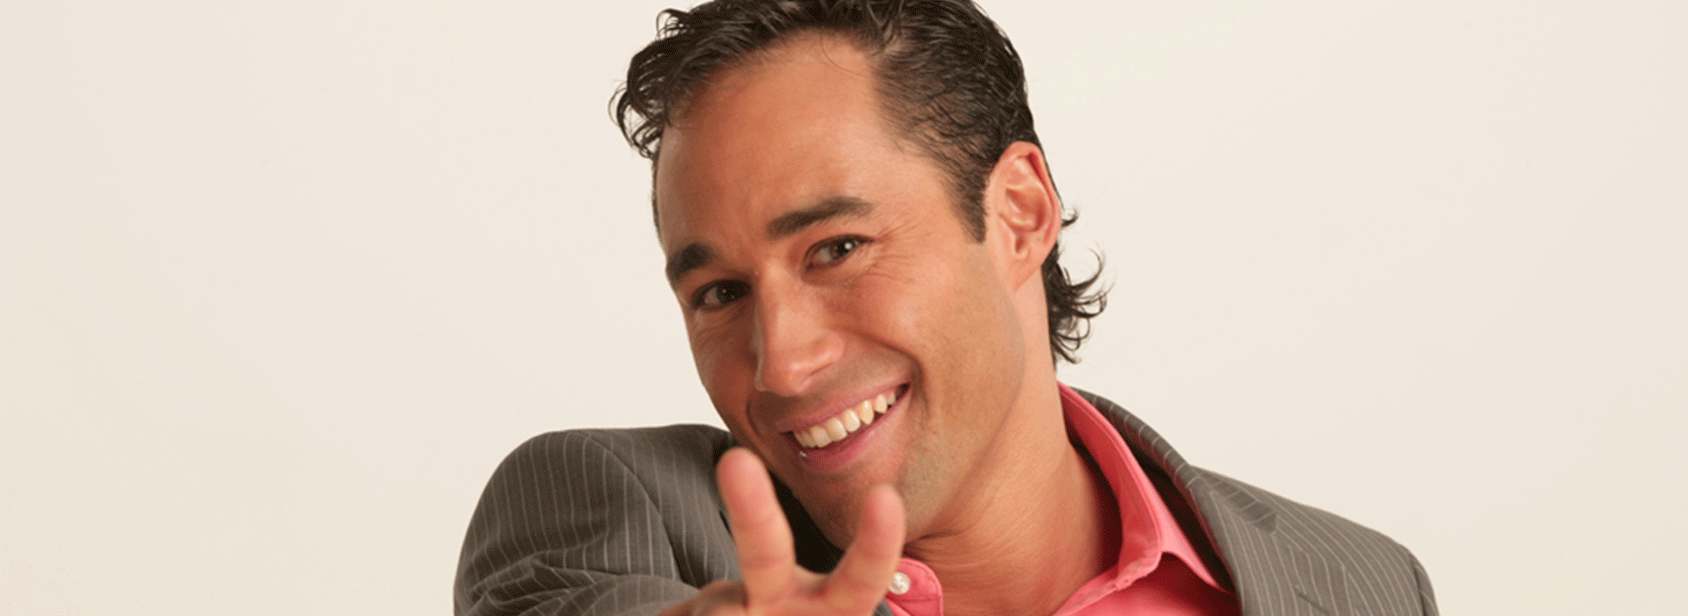 Juan-Jose-Ulloa-Celebrities-Mexico-Management